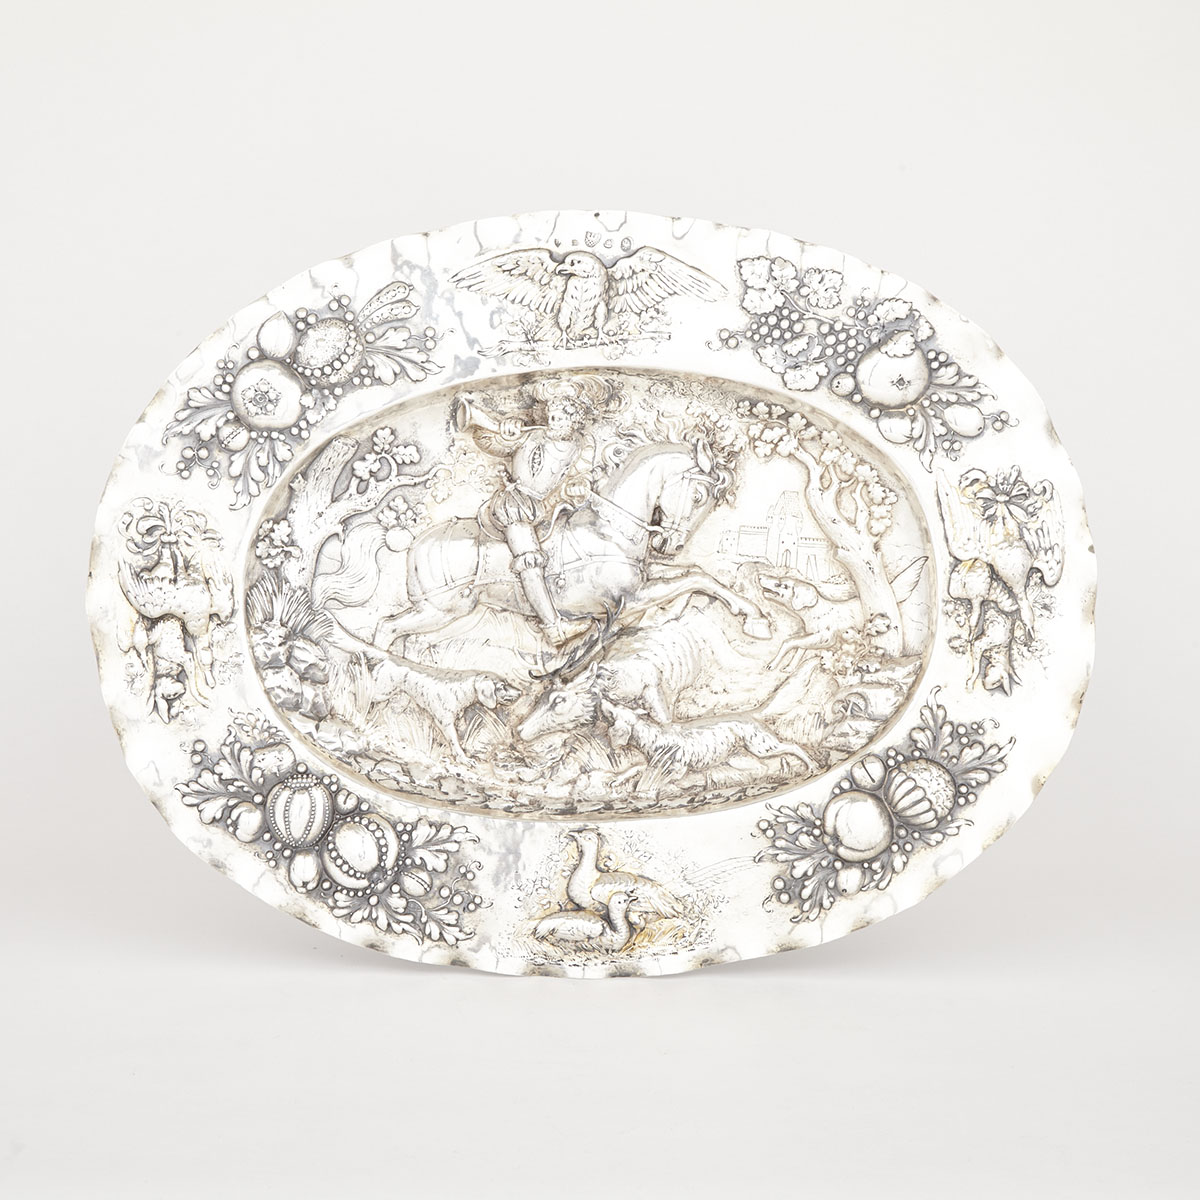 German Silver Oval Sideboard Dish, B. Neresheimer & Söhne, Hanau, late 19th century